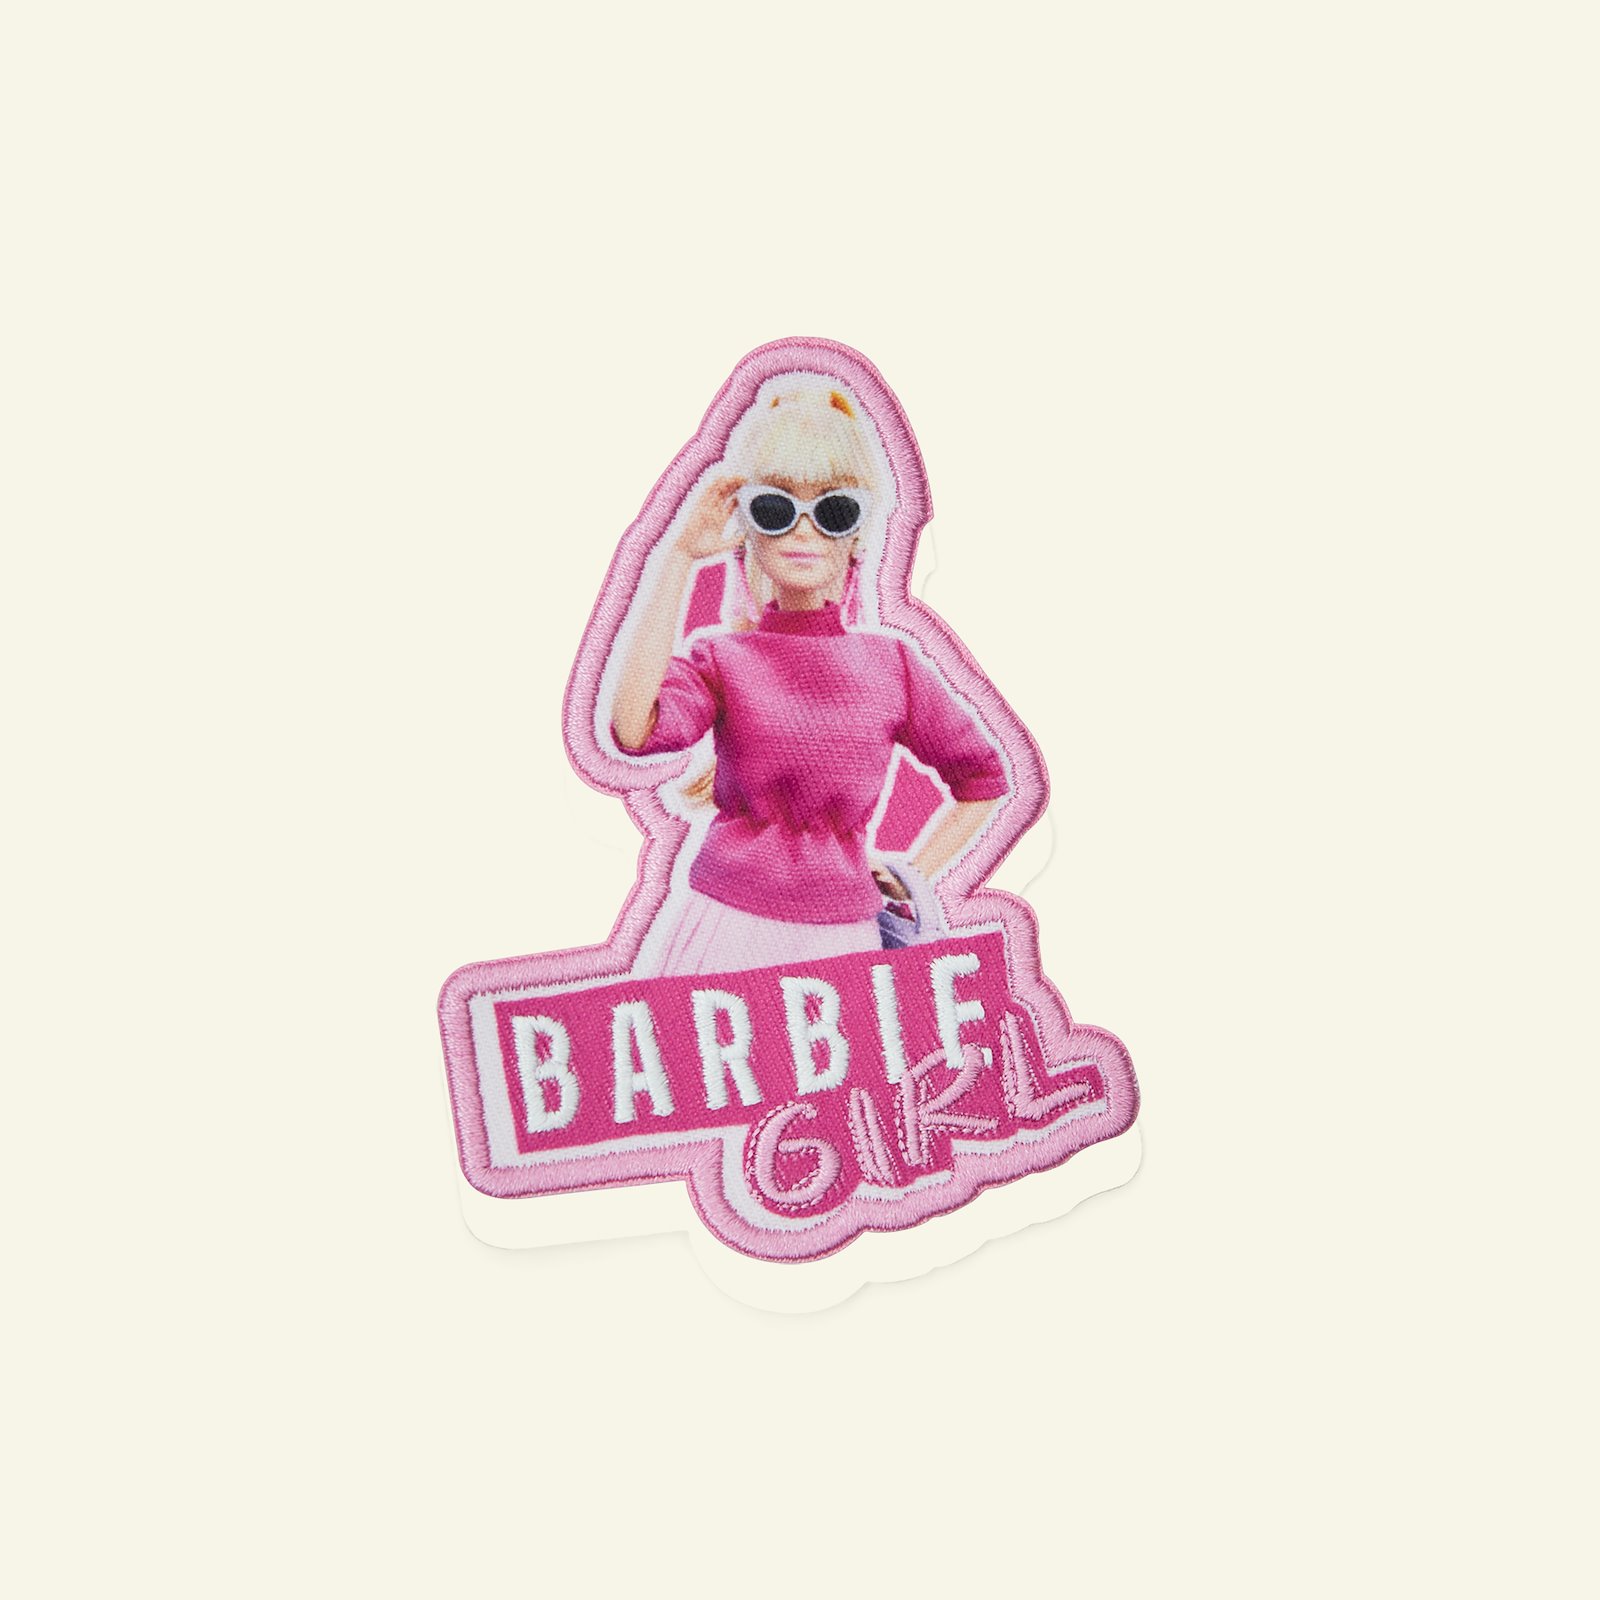 Patch Barbie Girl 85x65mm 1pcs 24990_pack